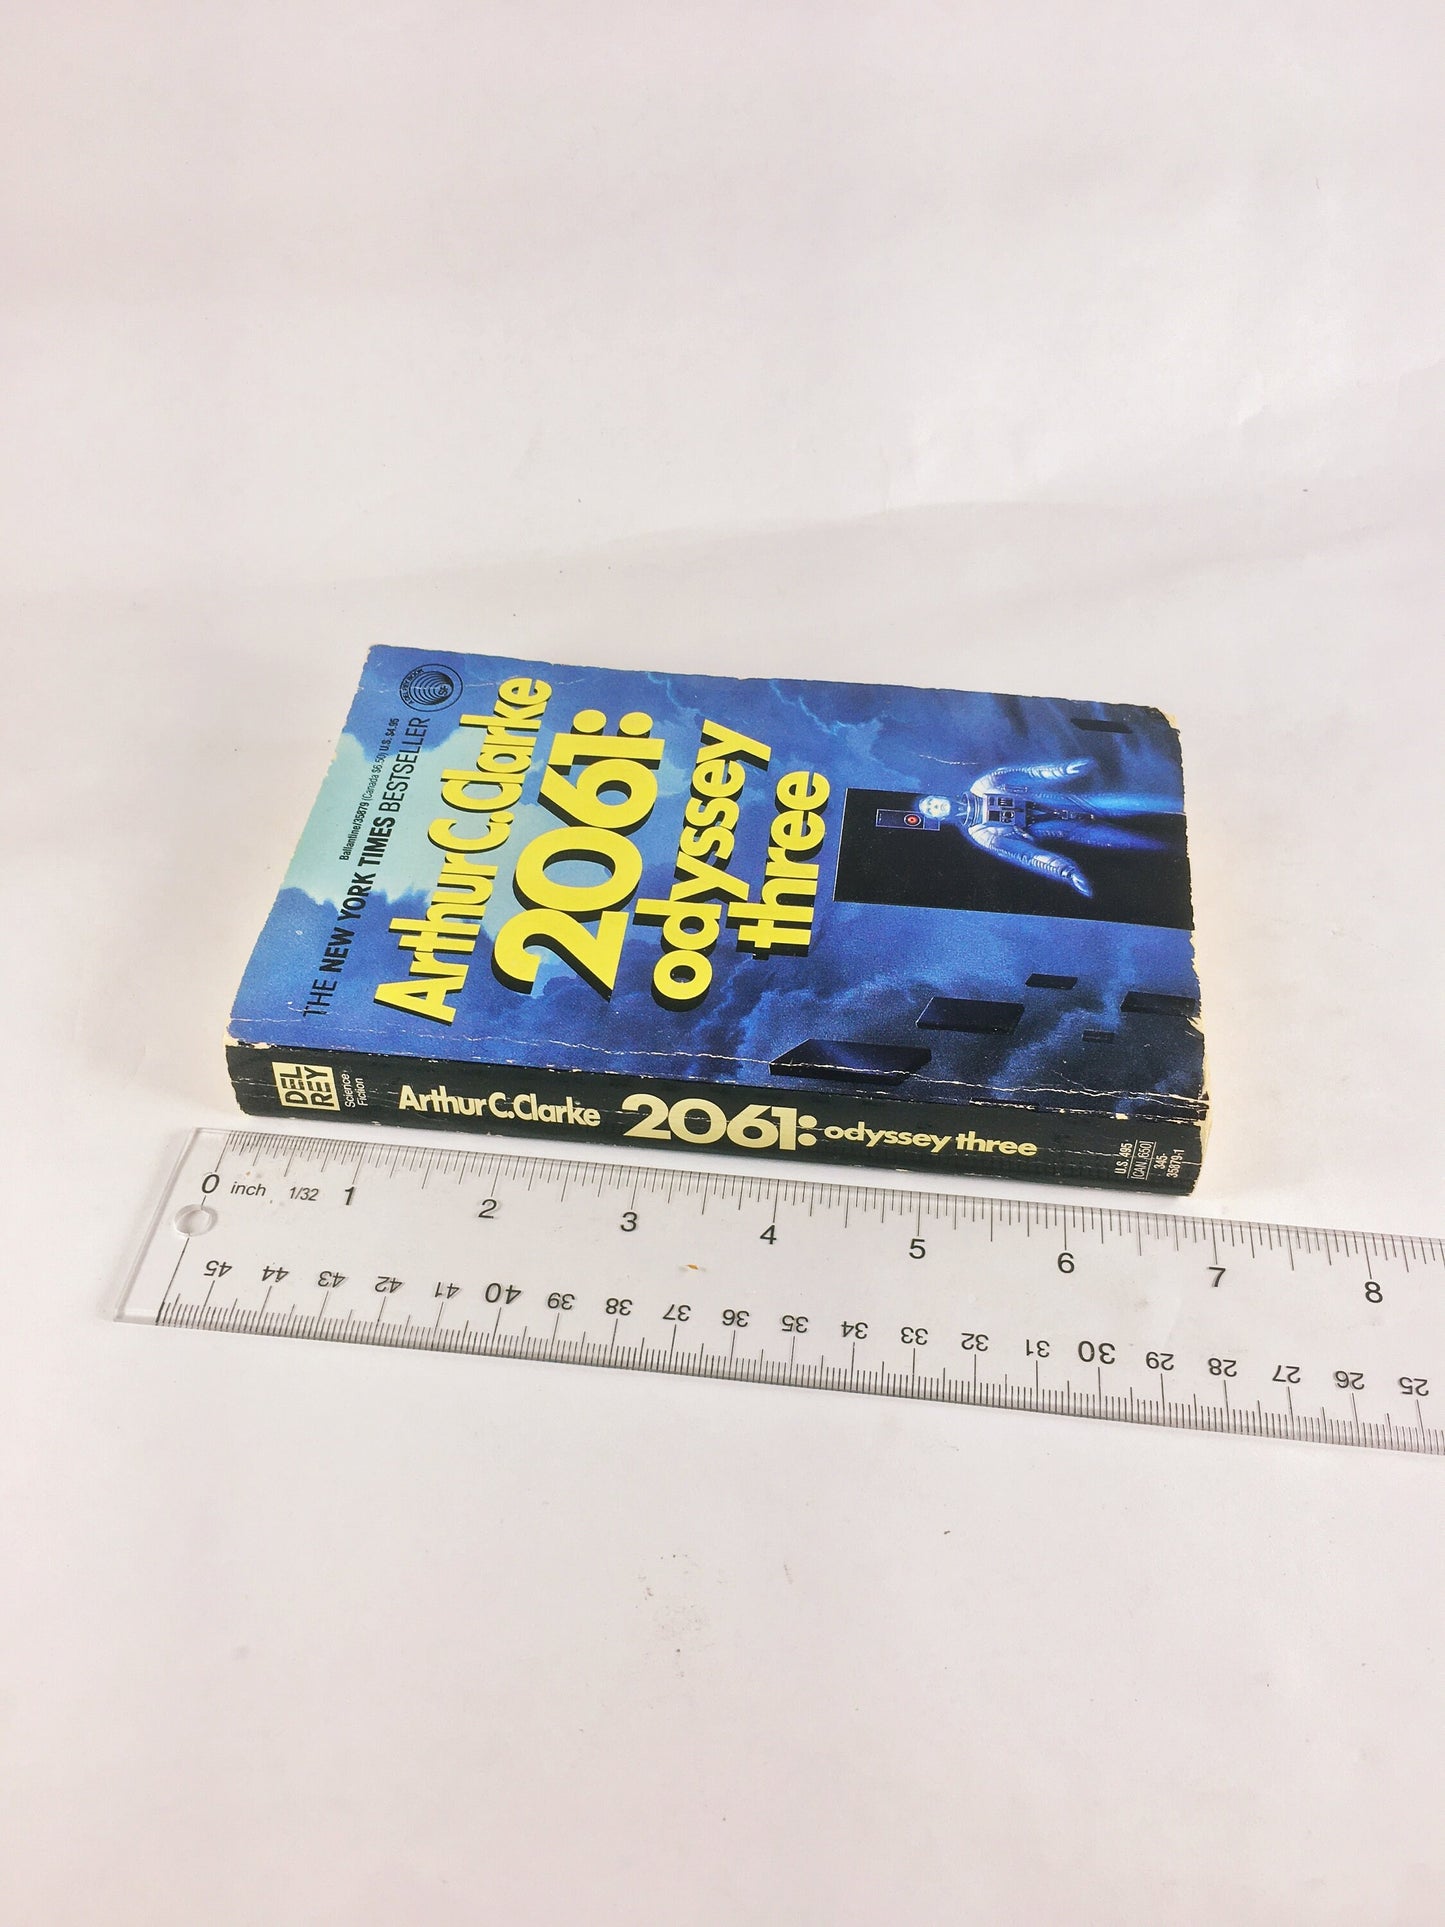 Arthur C Clarke 2061 Space Odyssey Three Vintage paperback book circa 1989. FIRST Mass PRINTING science fiction Nebula & Hugo awards